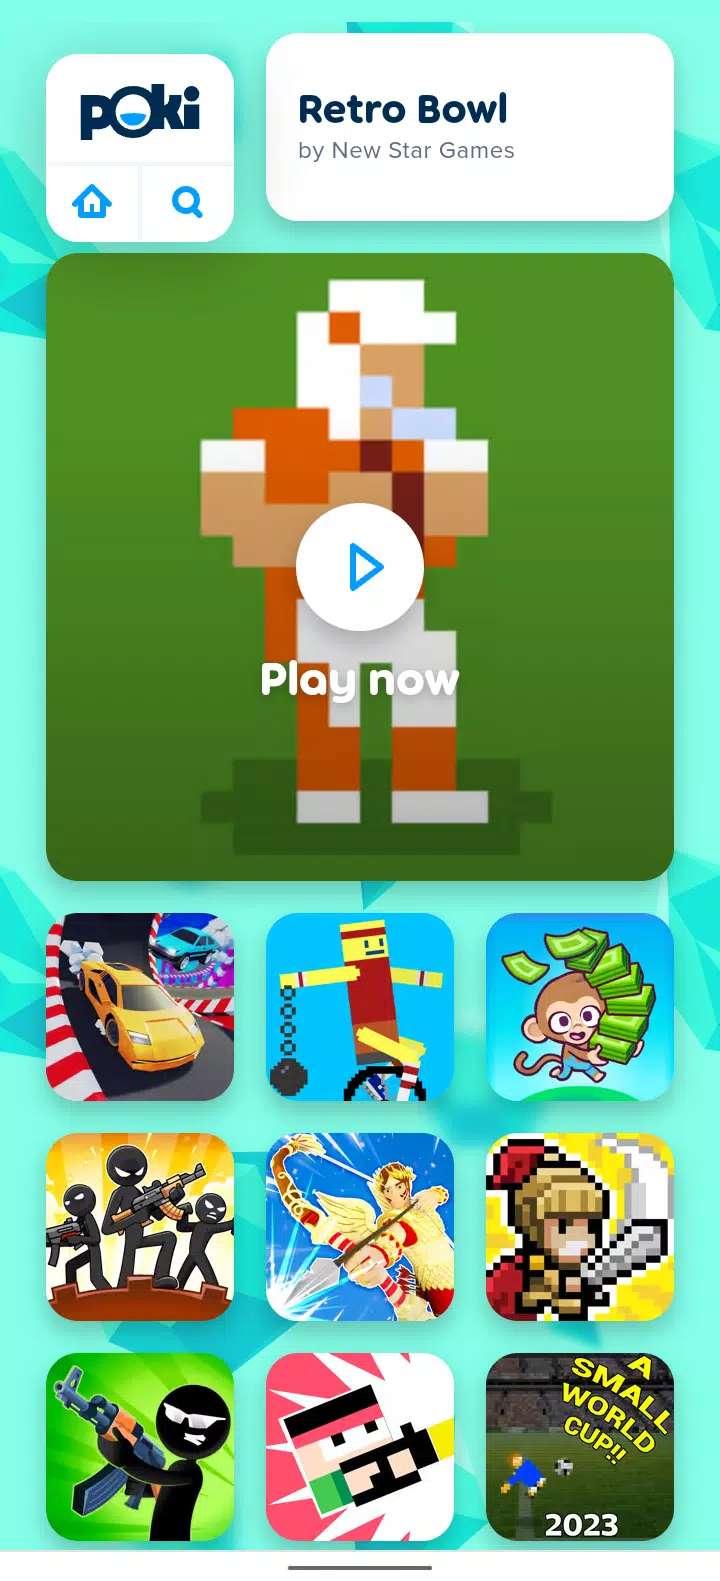 Poki Games APK (Android Game) - Ücretsi̇z İndi̇ri̇n